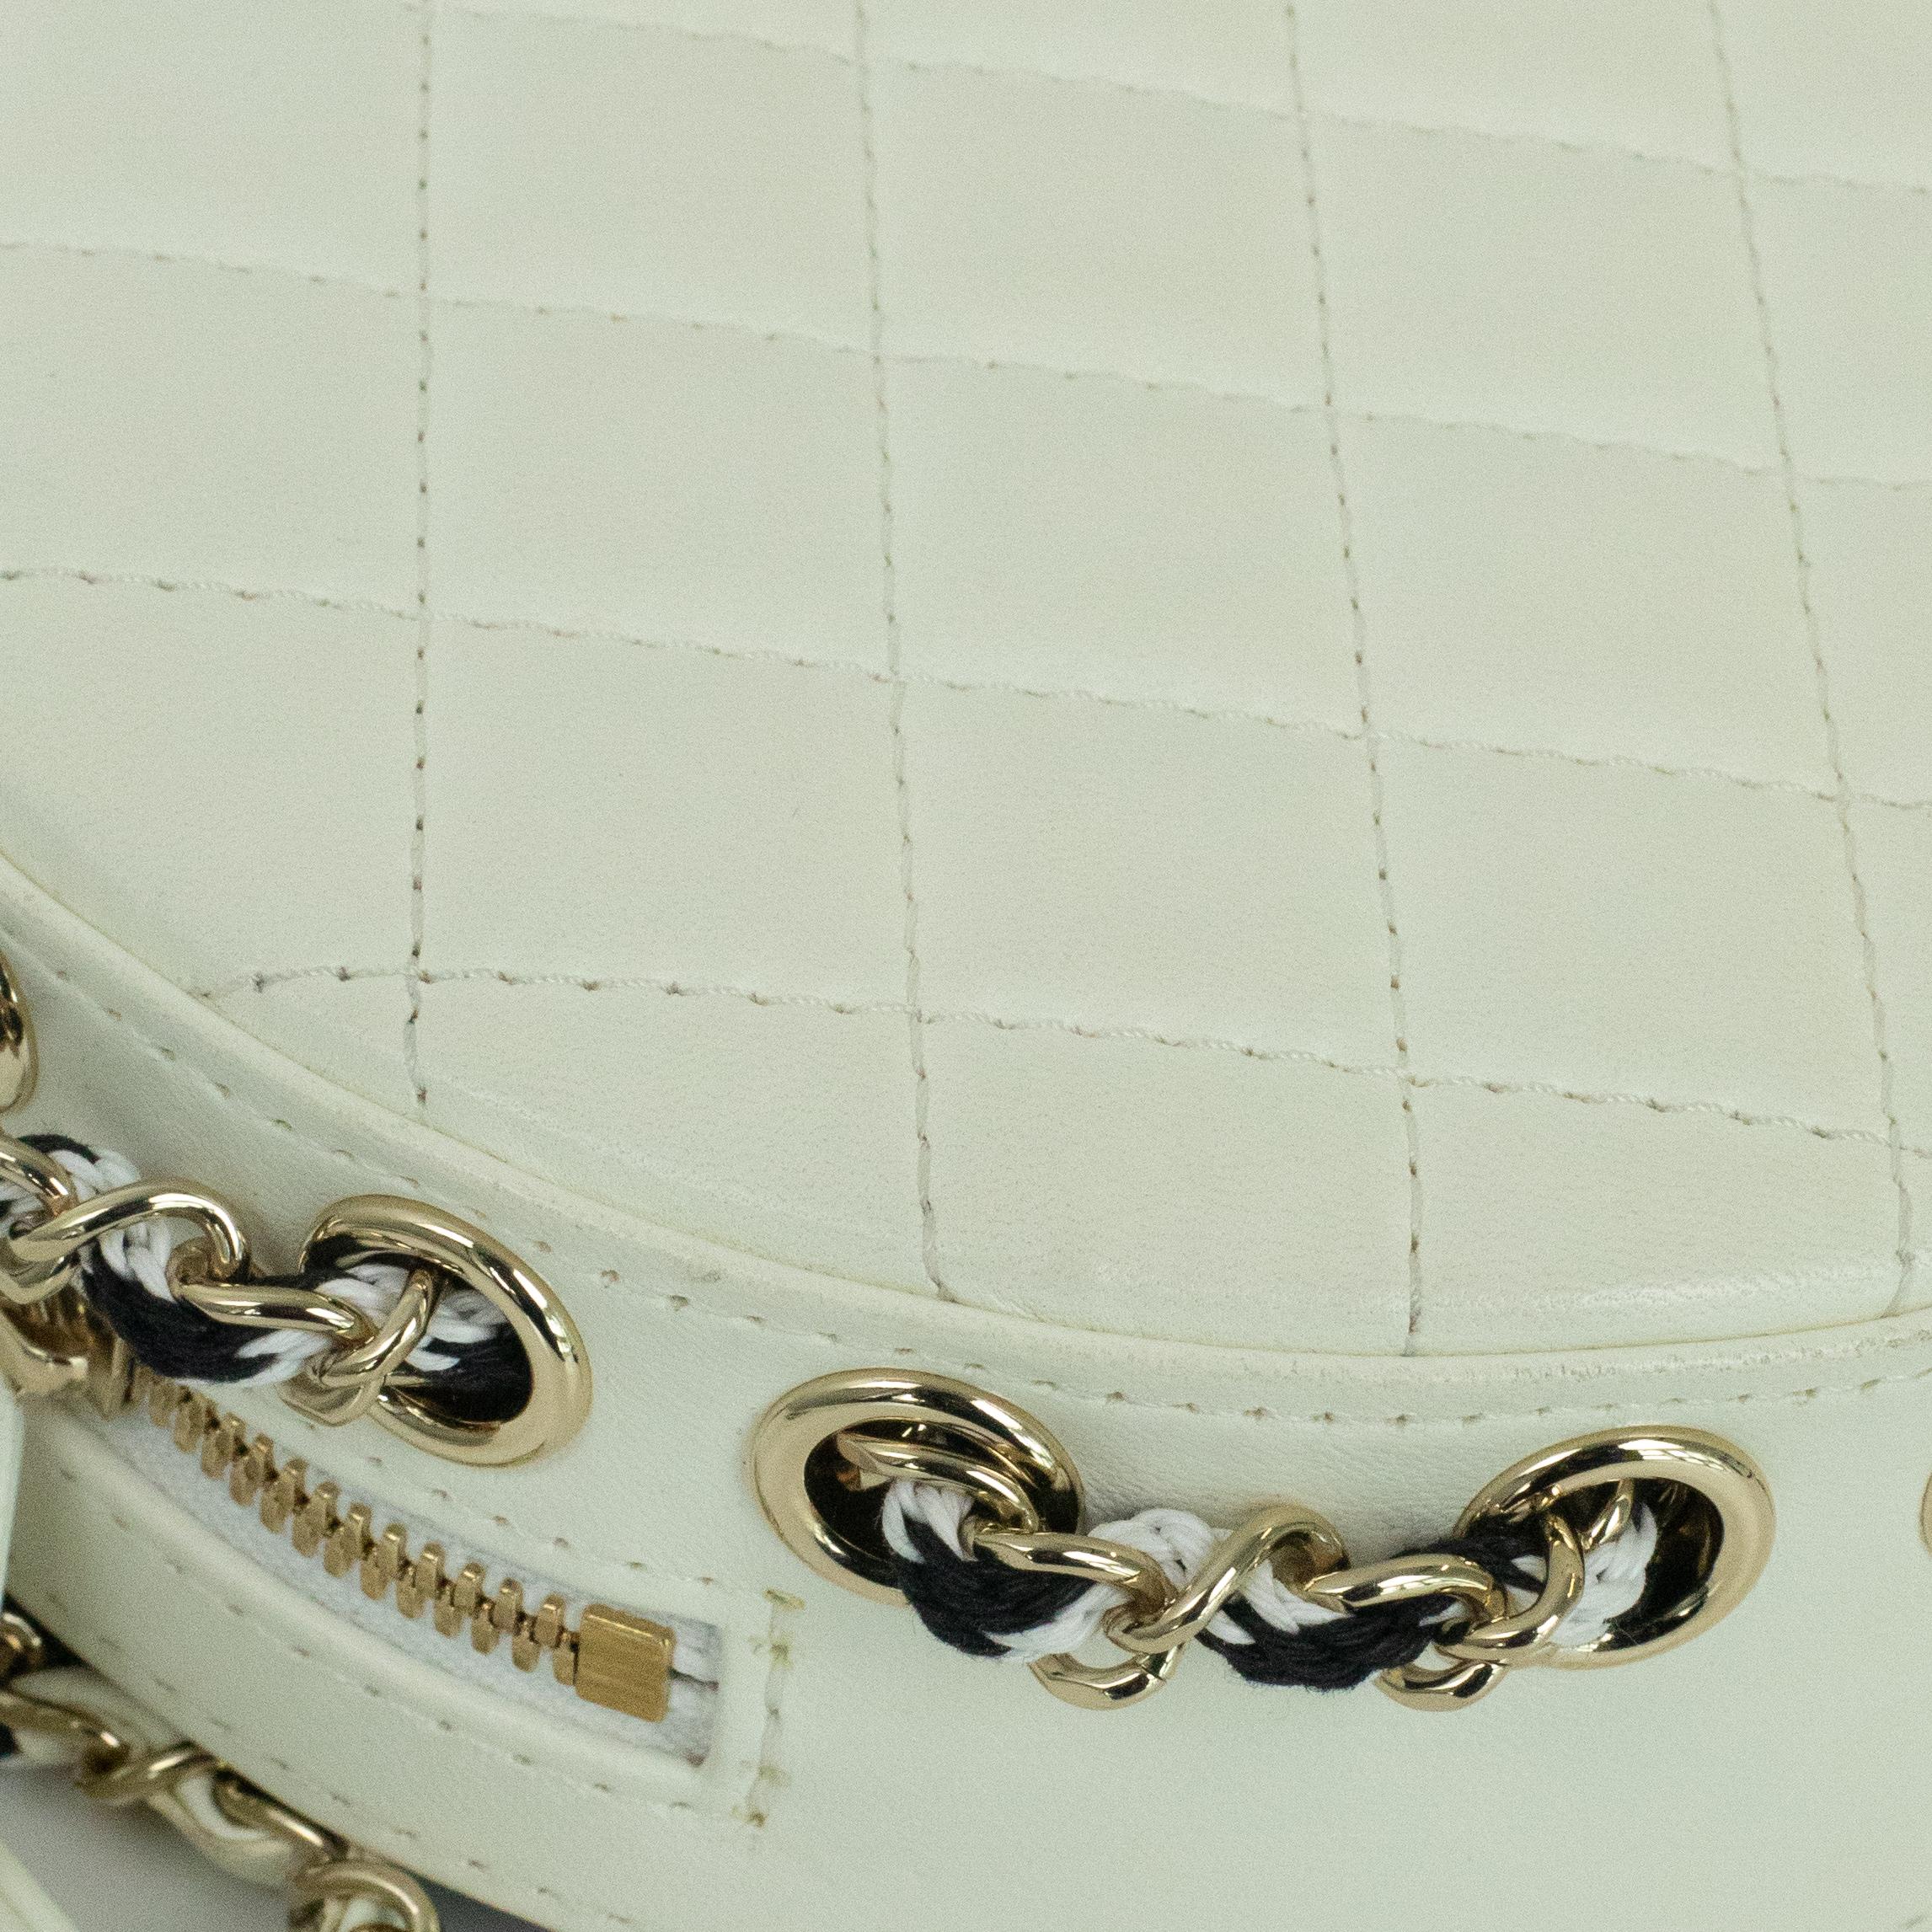 Chanel, La pausa in white leather 5